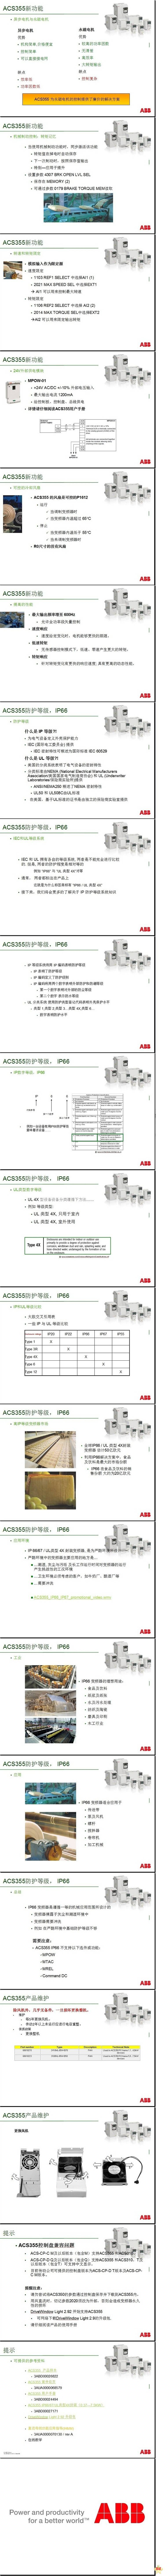 ABB 变频器 机械传动 三相 380V ACS355-03E-44A0-4 变频器,机械传动,微型传动,ACS355,ABB